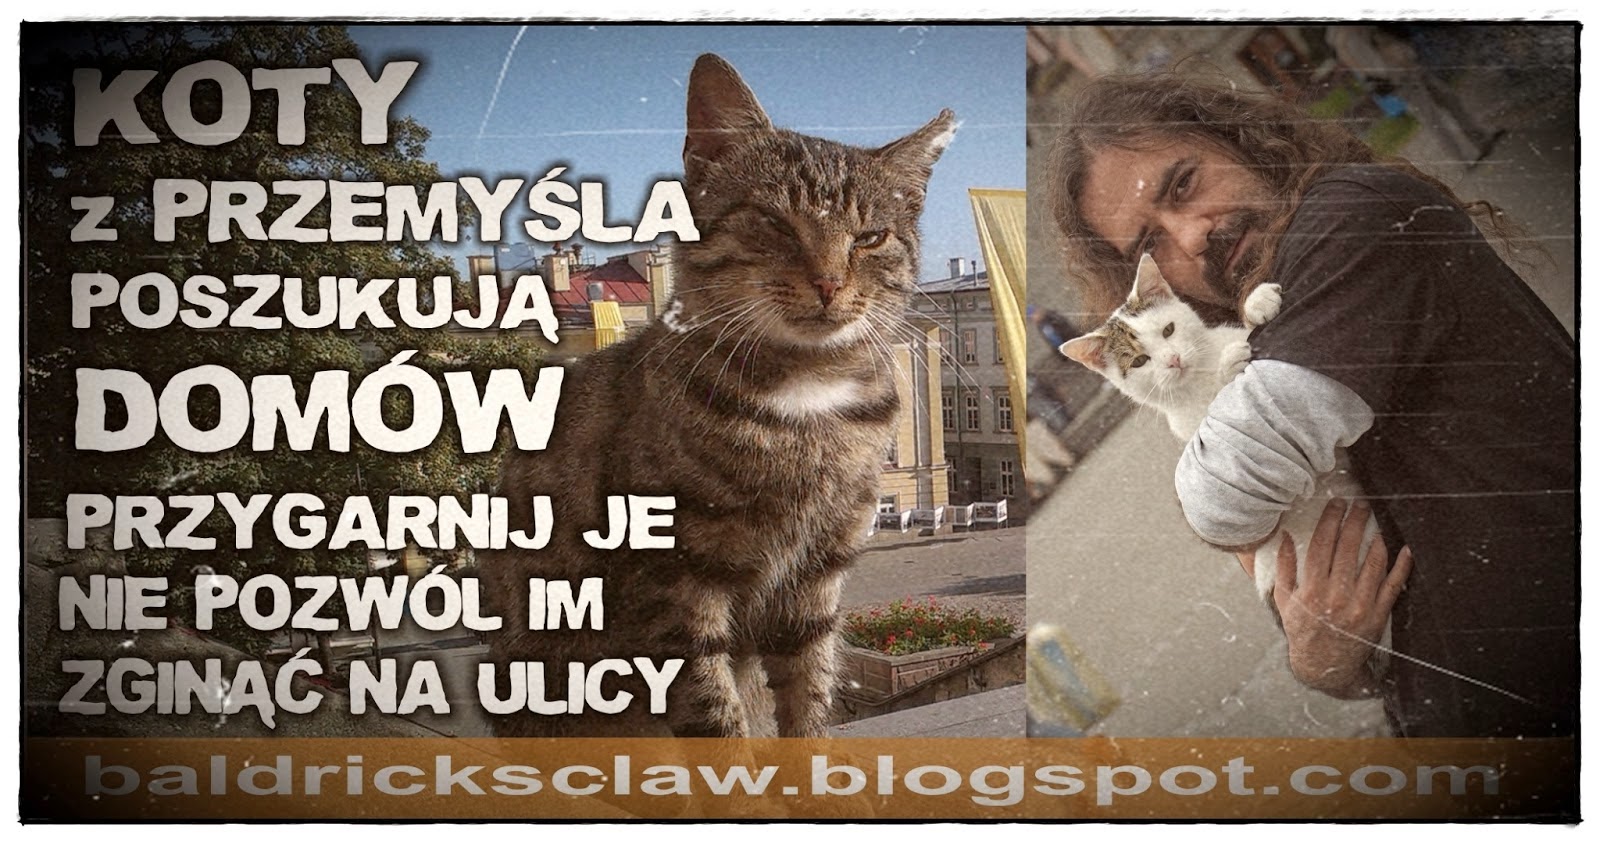 http://baldricksclaw.blogspot.nl/2014/10/ojczymatka-zastepcza.html#comment-form